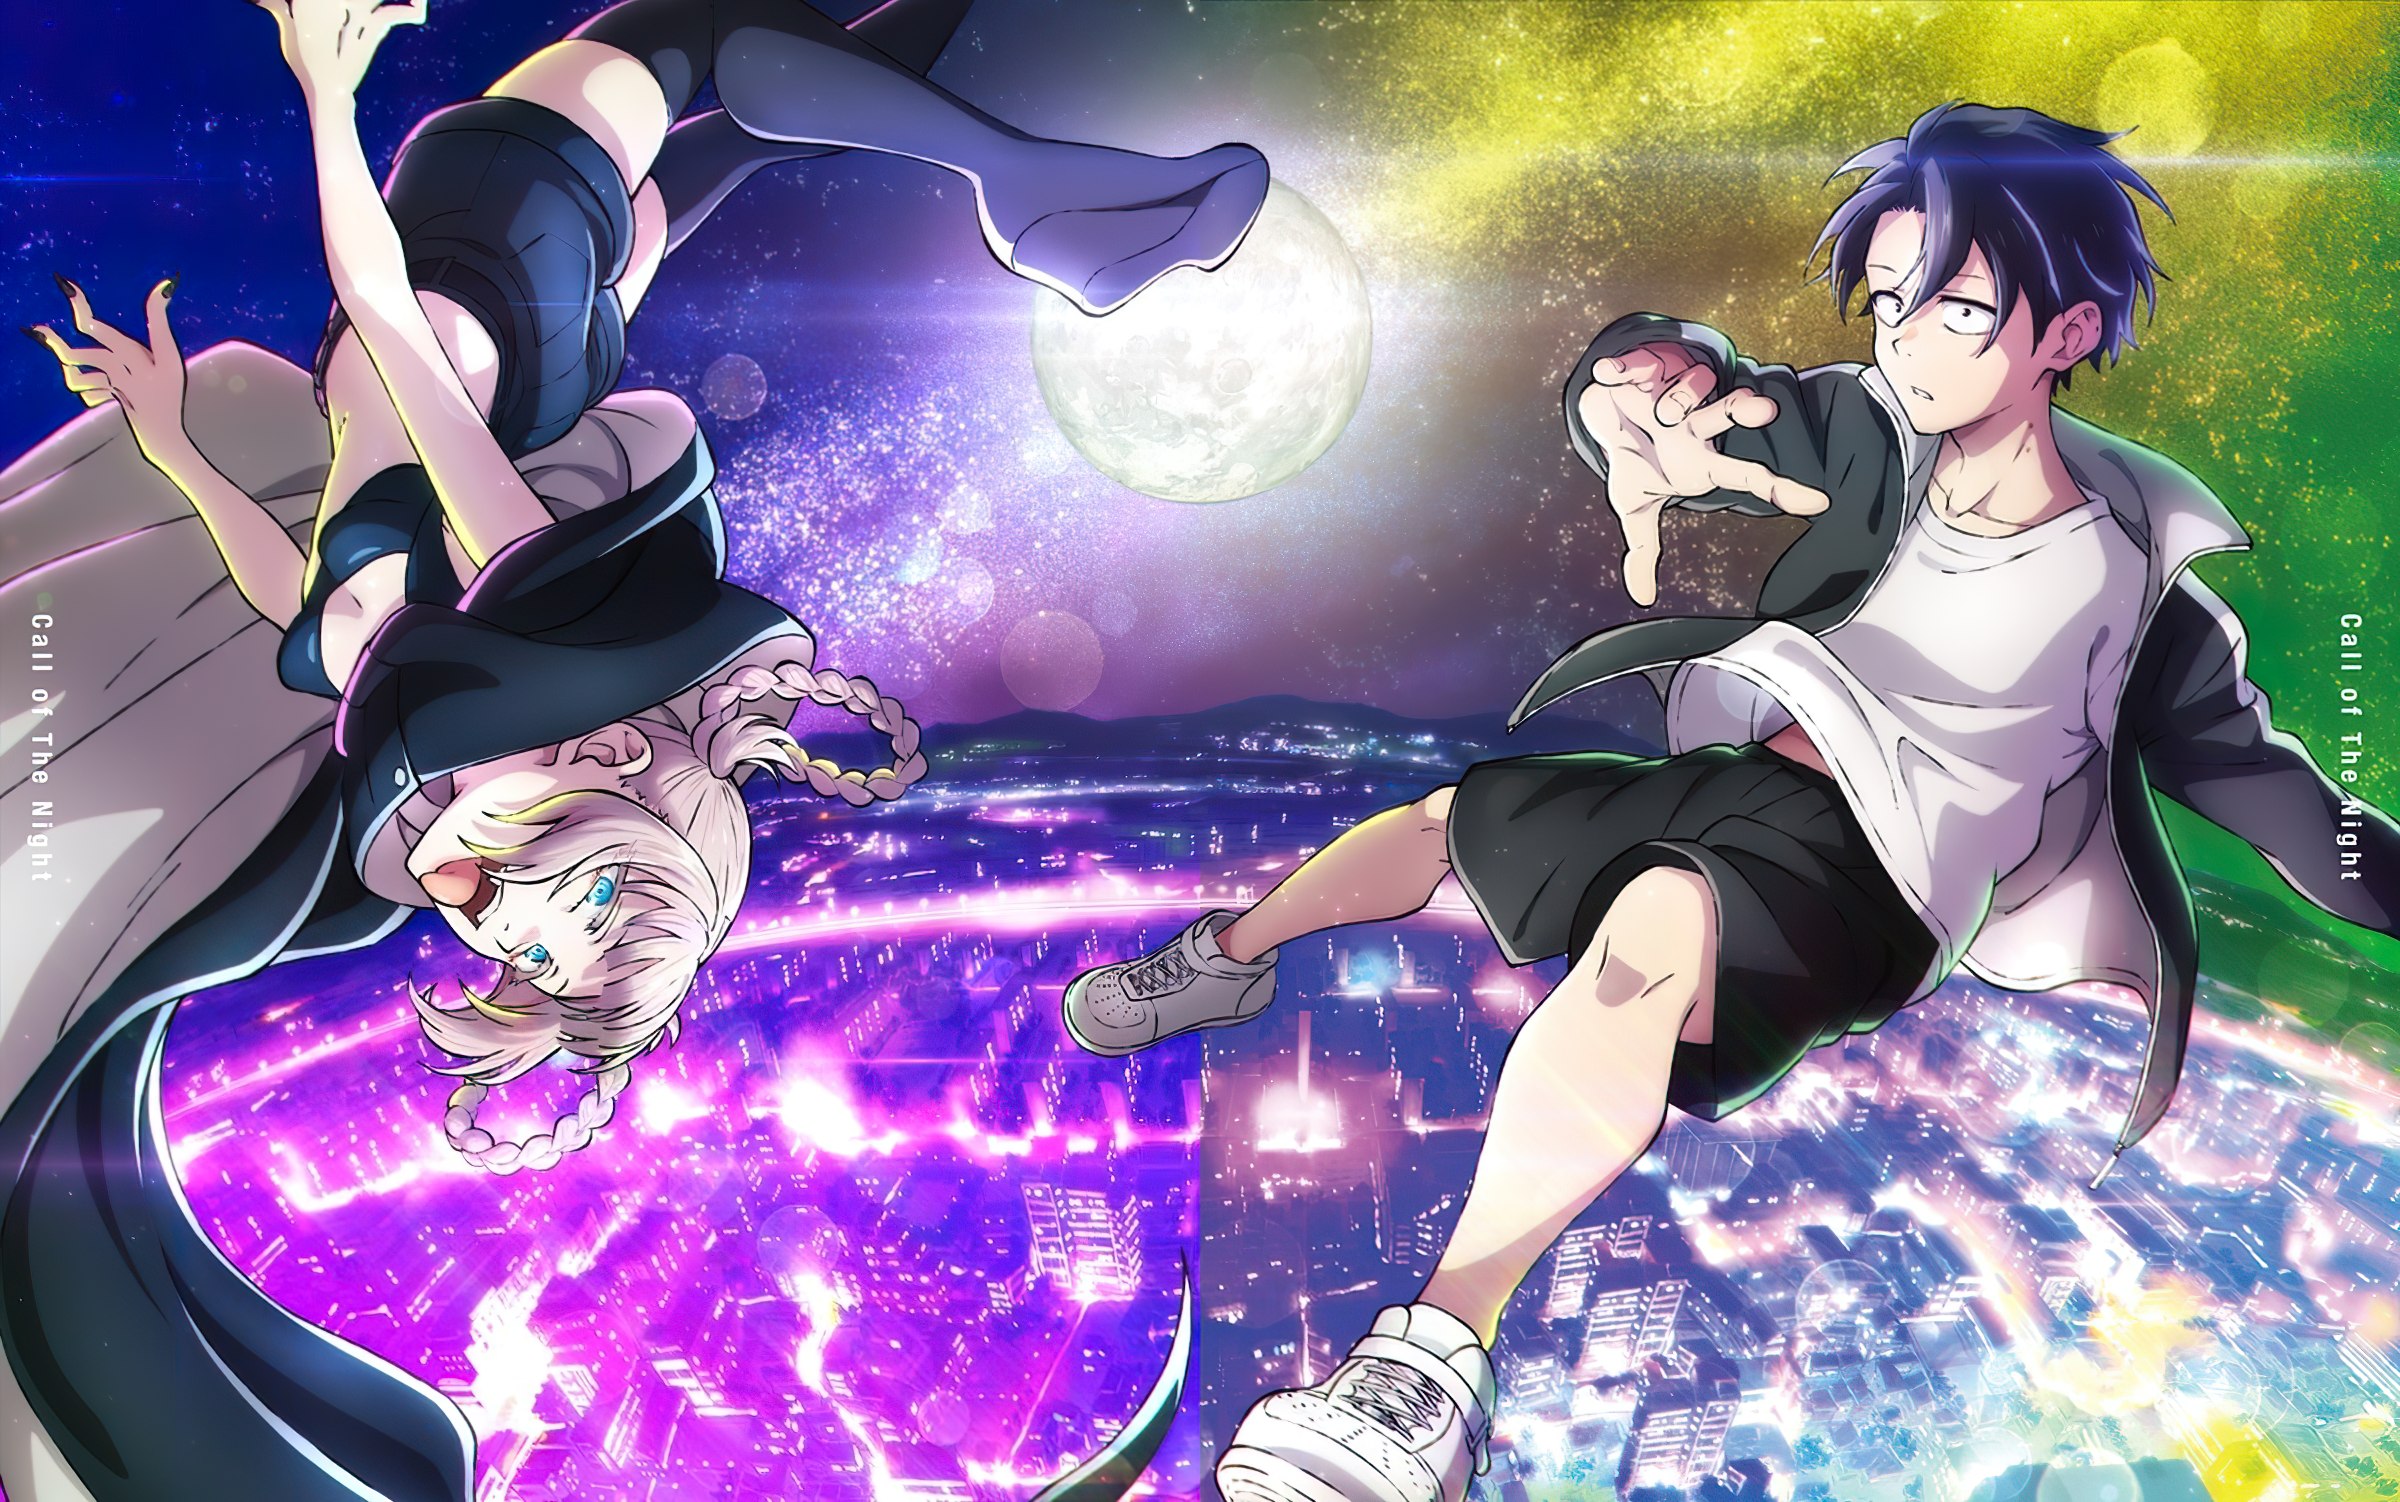 Call of the Night VOL 3  Anime Manga covers Anime wallpaper